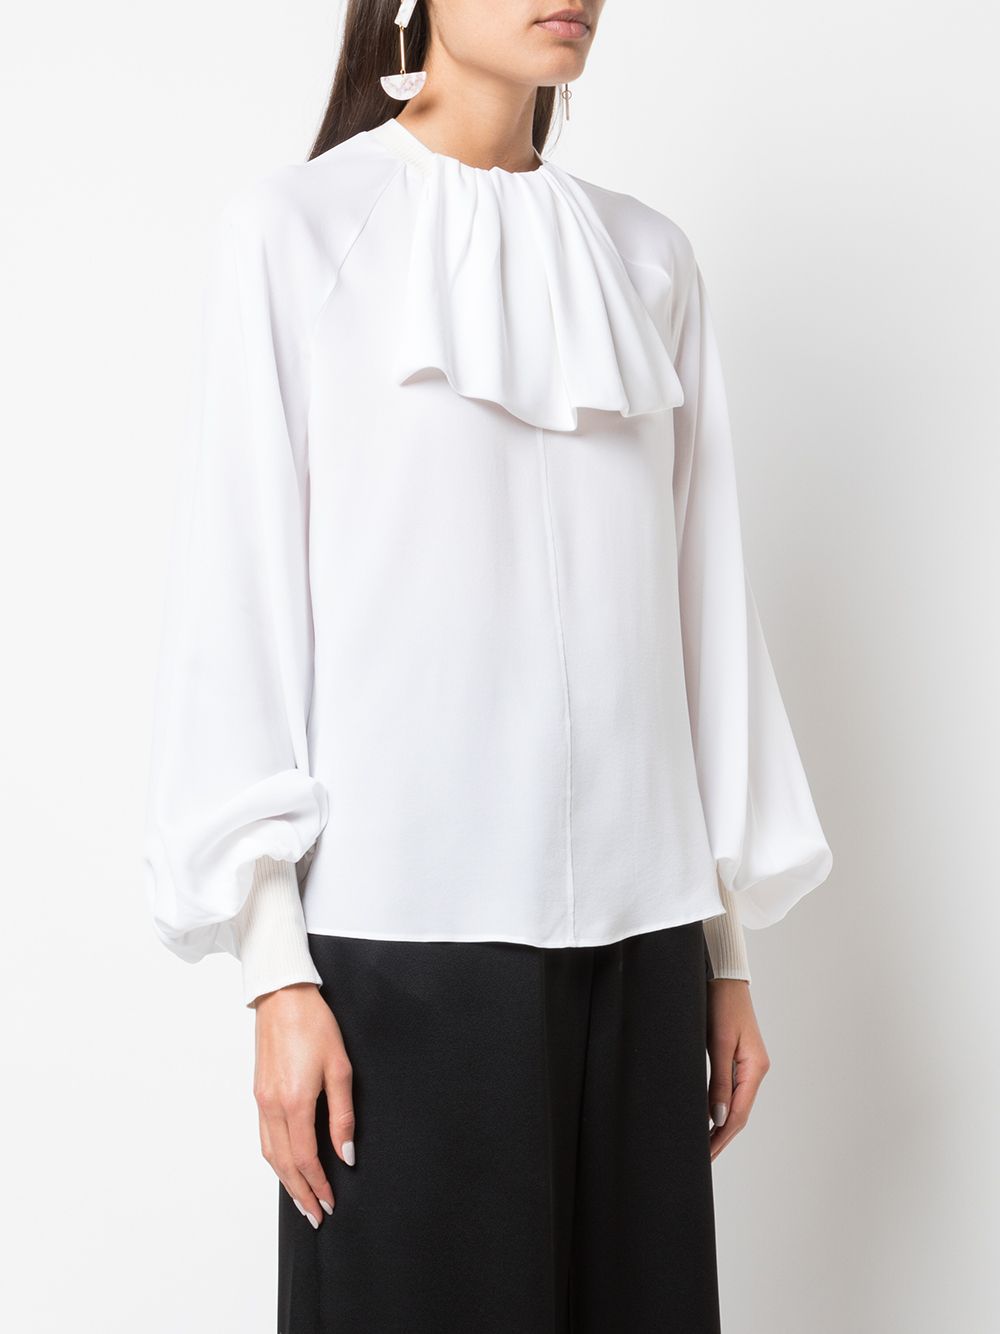 фото Loewe блузка lavaliere с воротником в рубчик